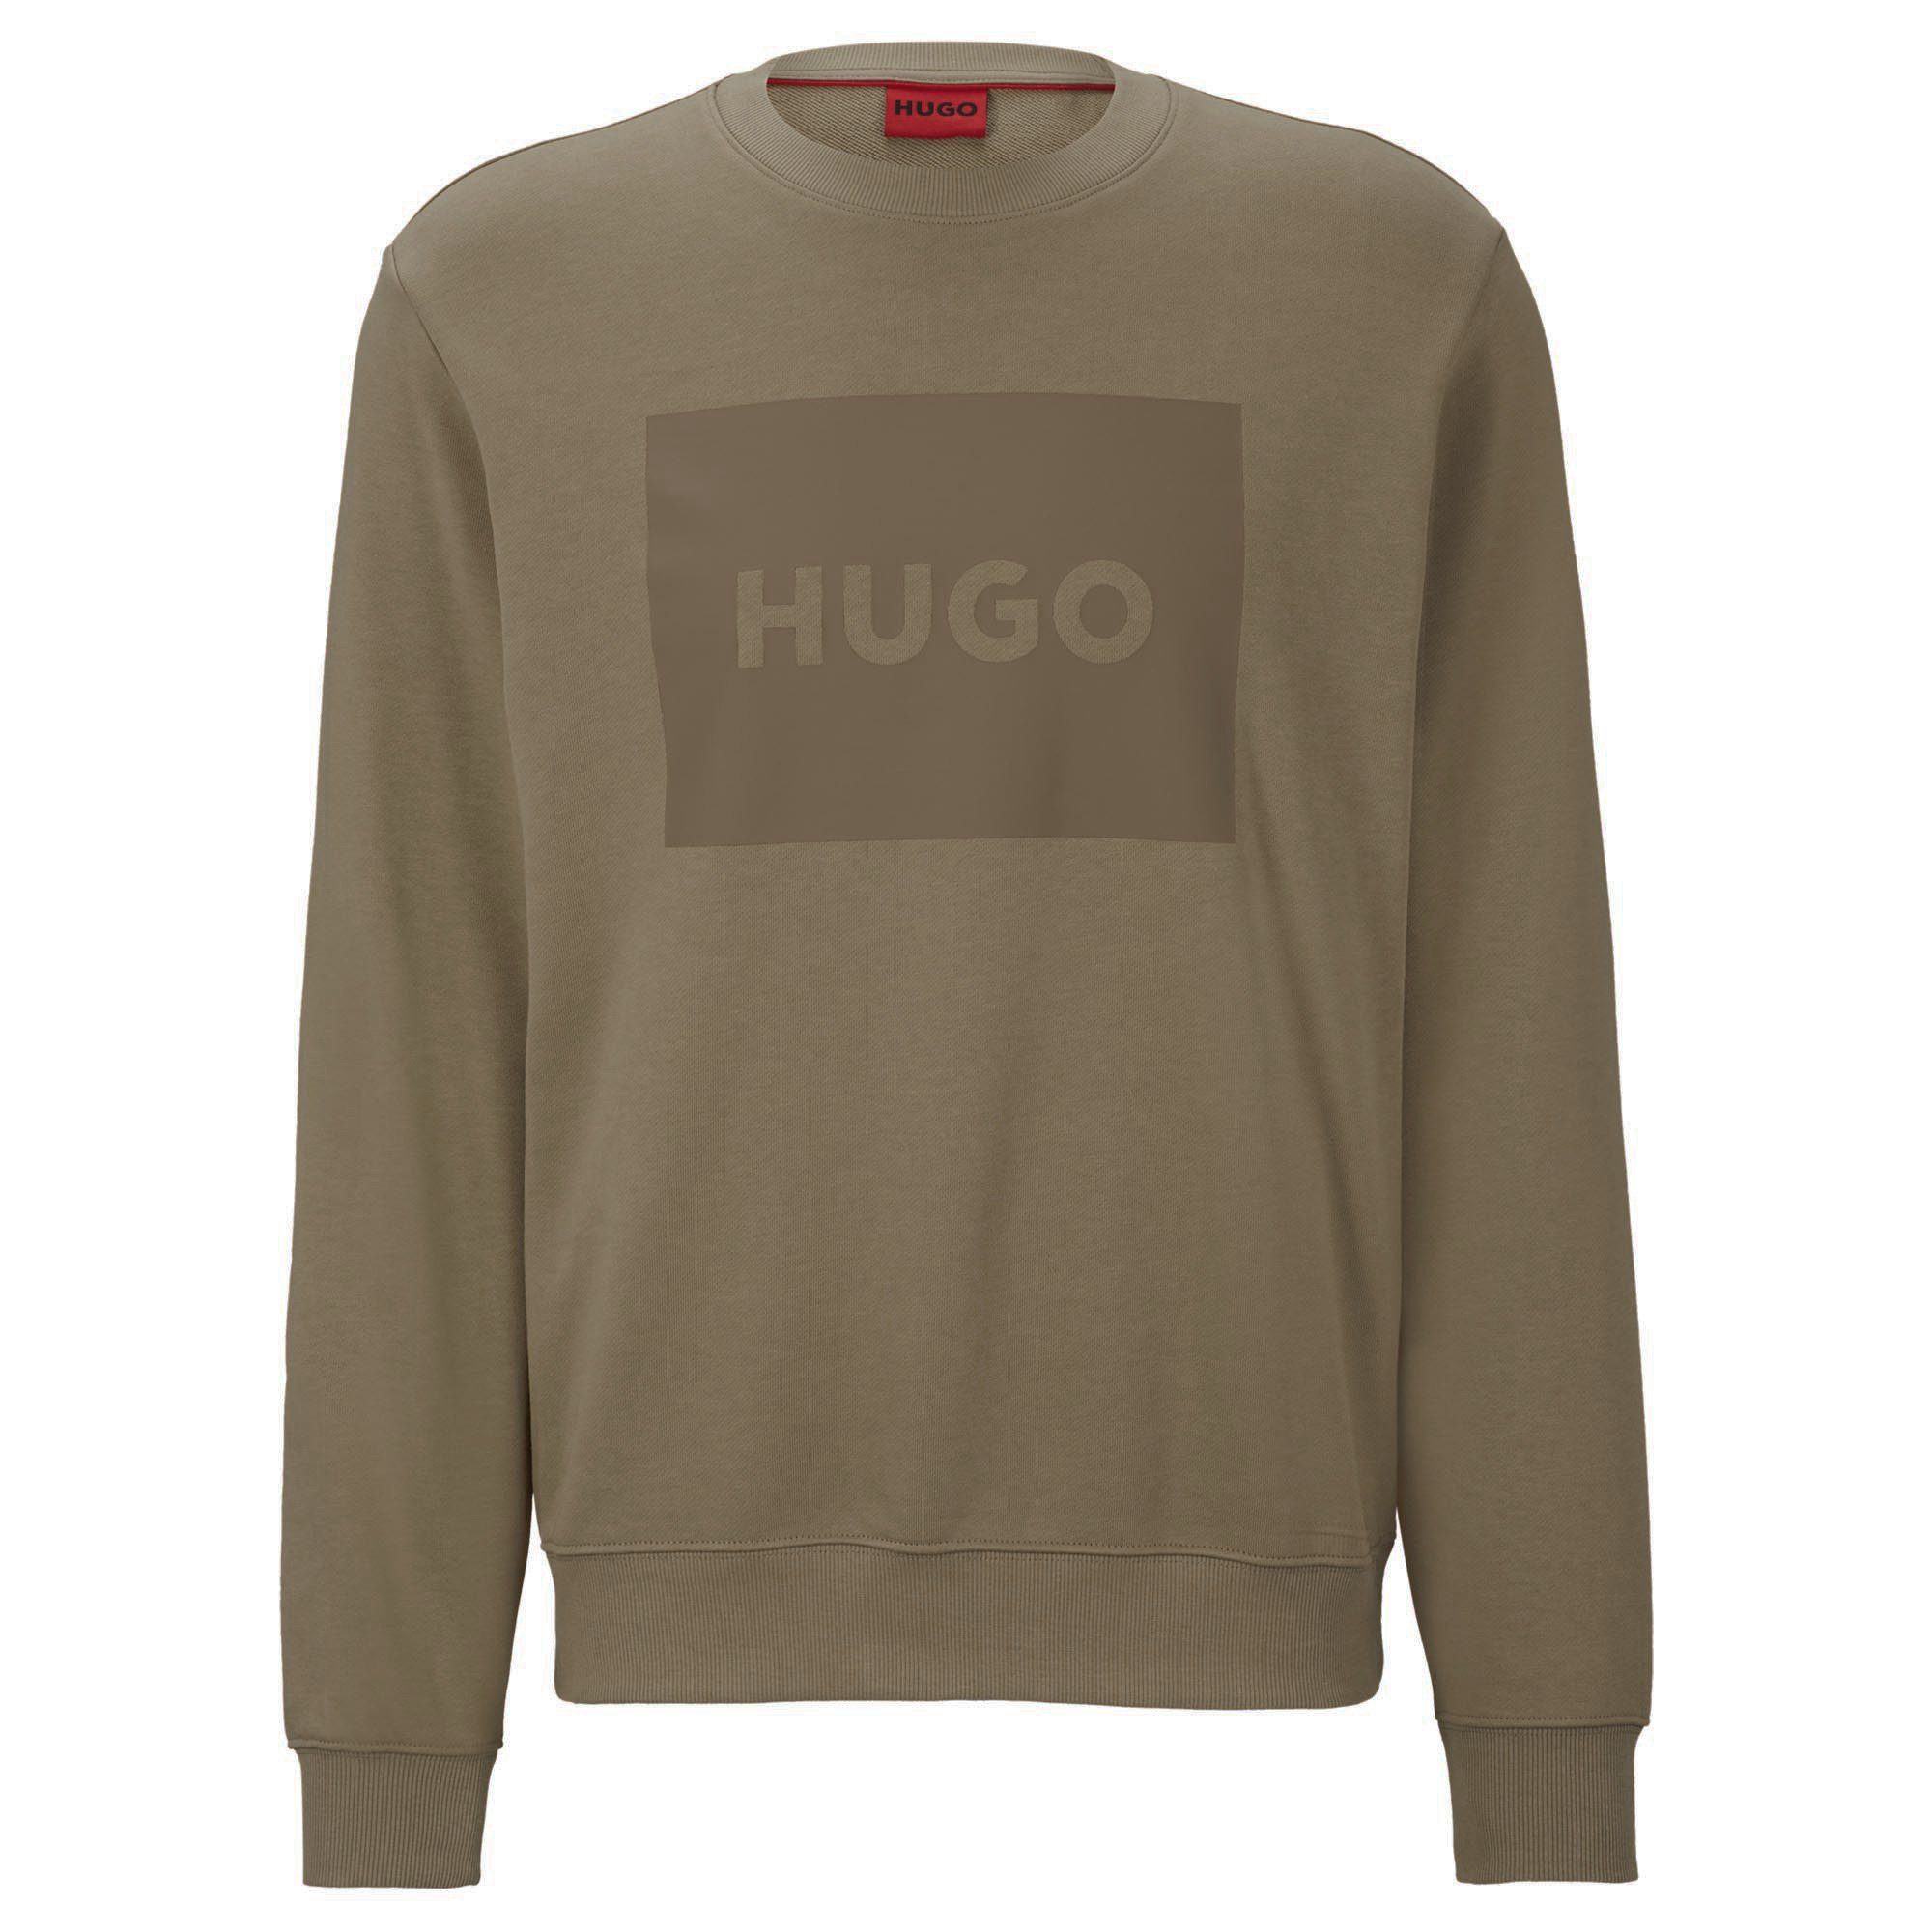 HUGO Duragol222, - Rundhals Sweater Braun Sweatshirt Sweatshirt, Herren